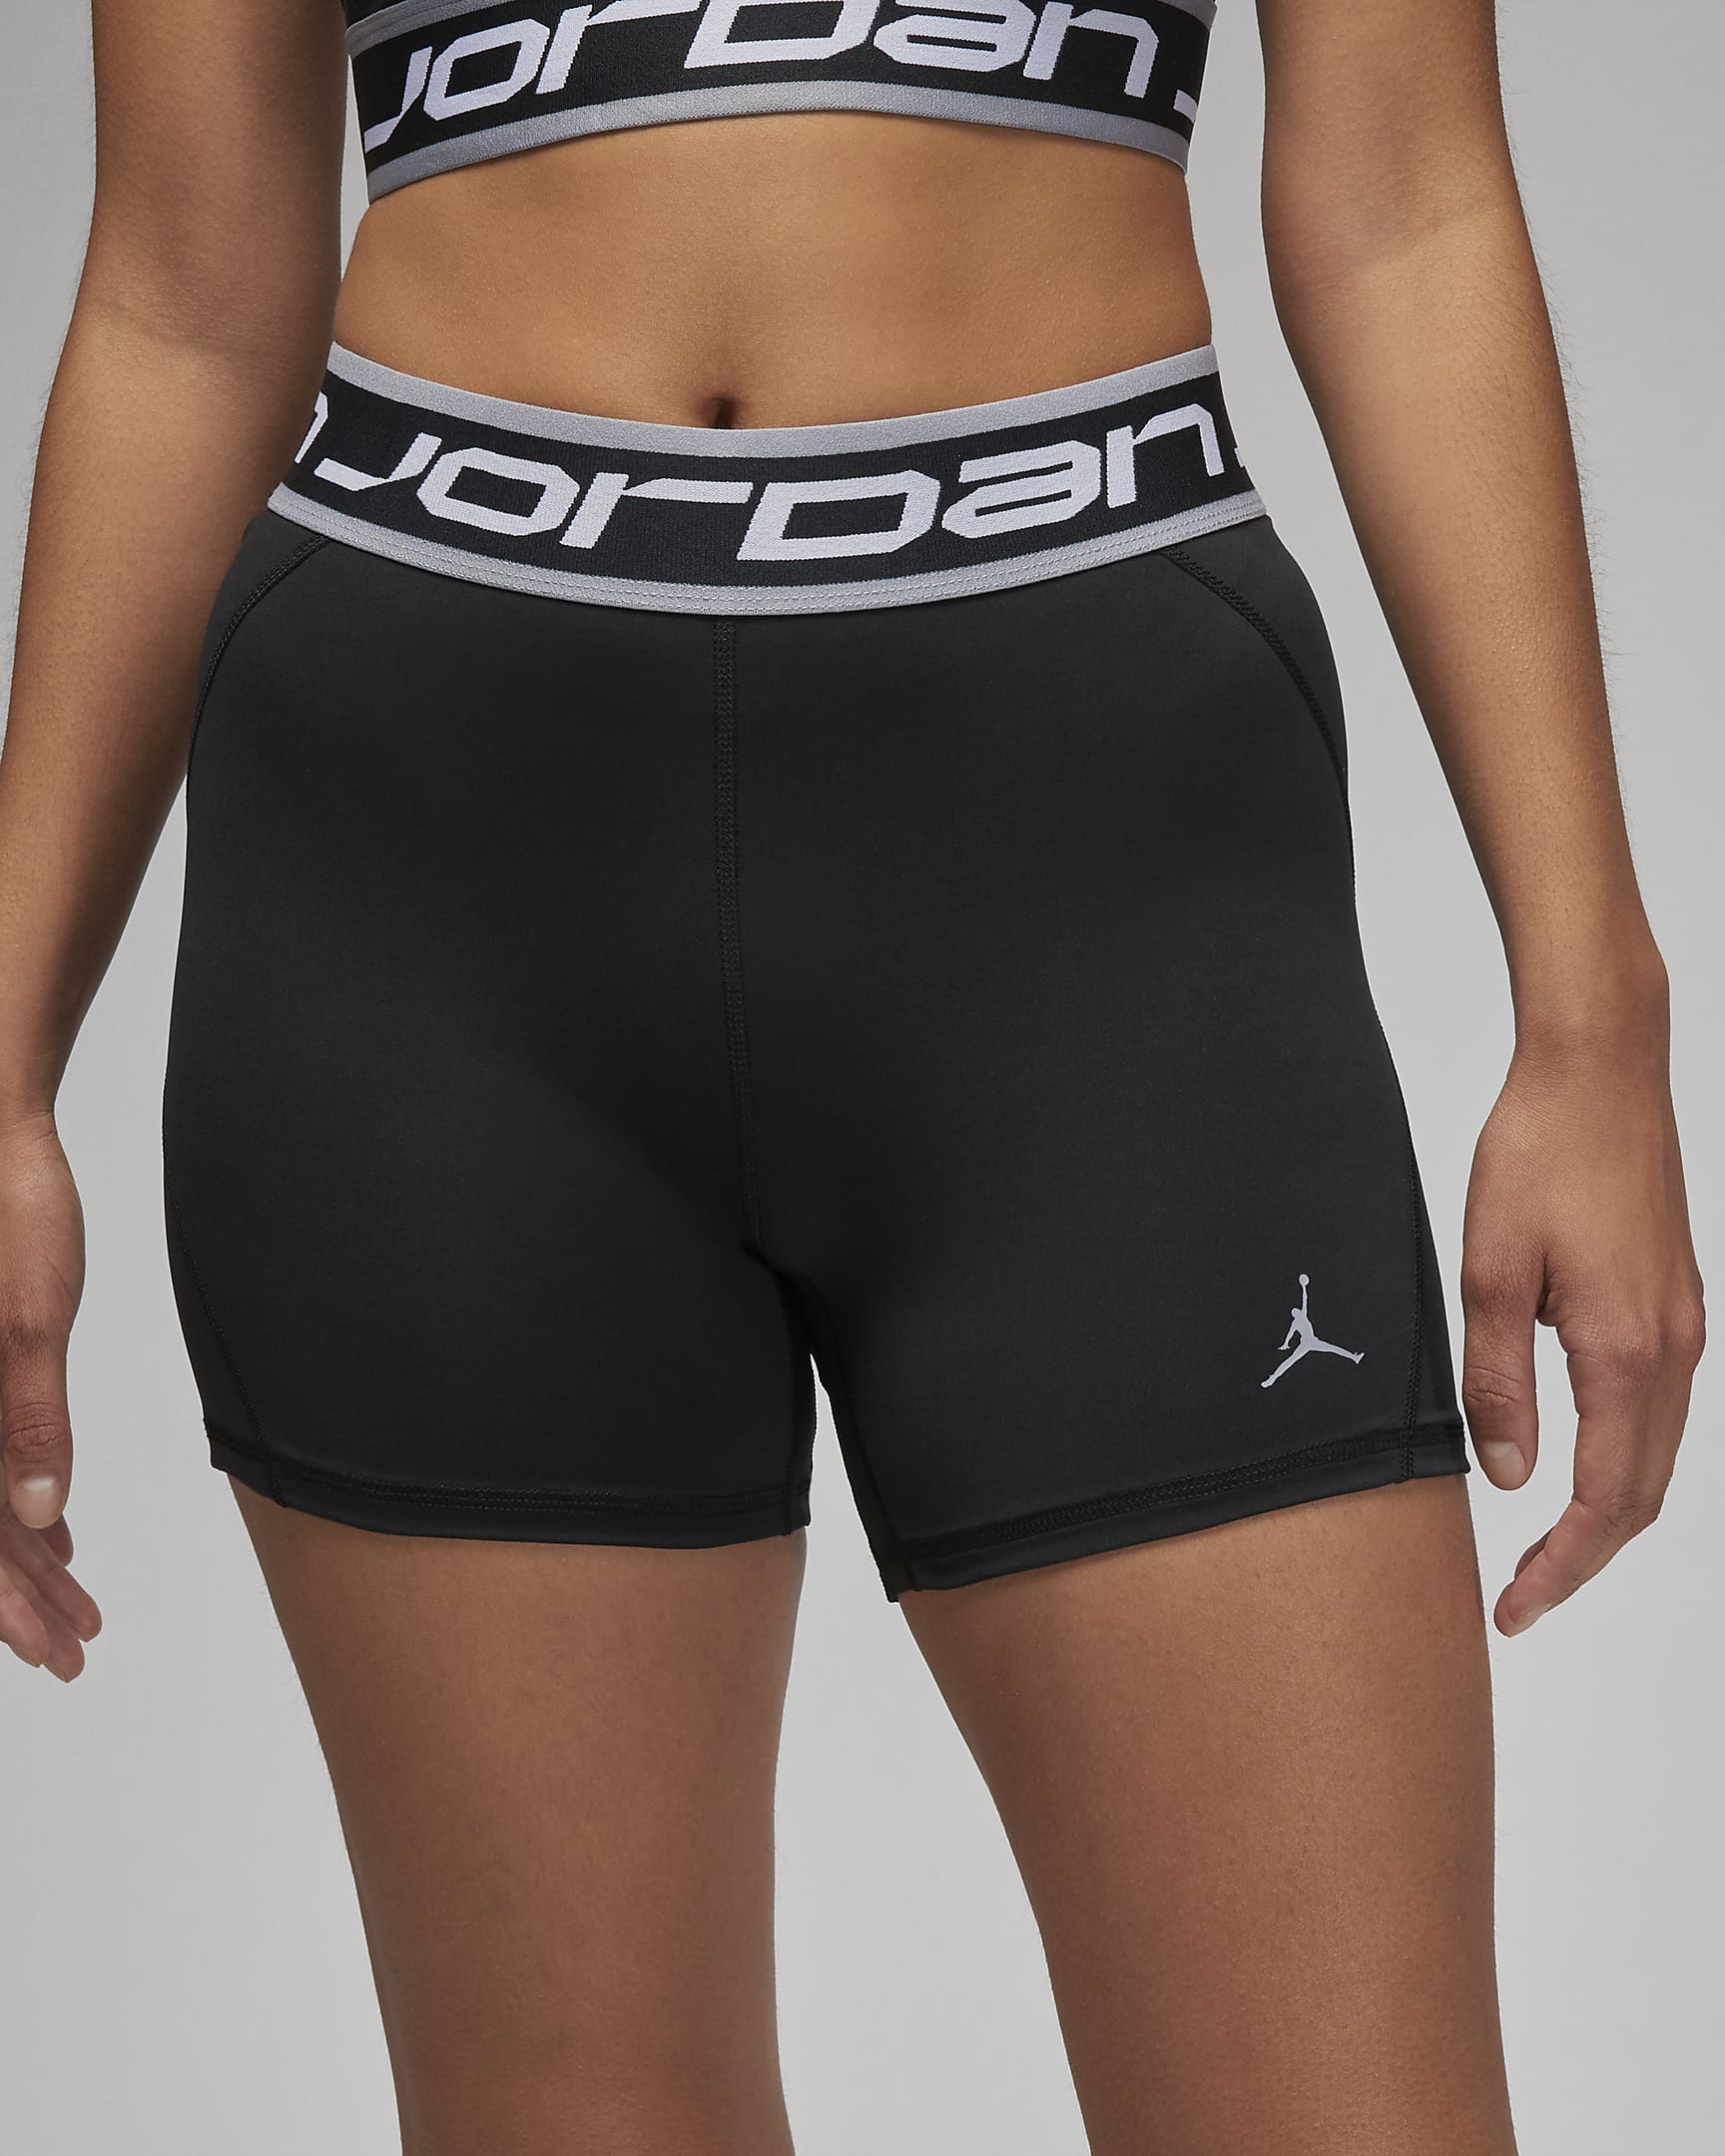 Jordan Sport Women's 13cm (approx.) Shorts - Black/Stealth